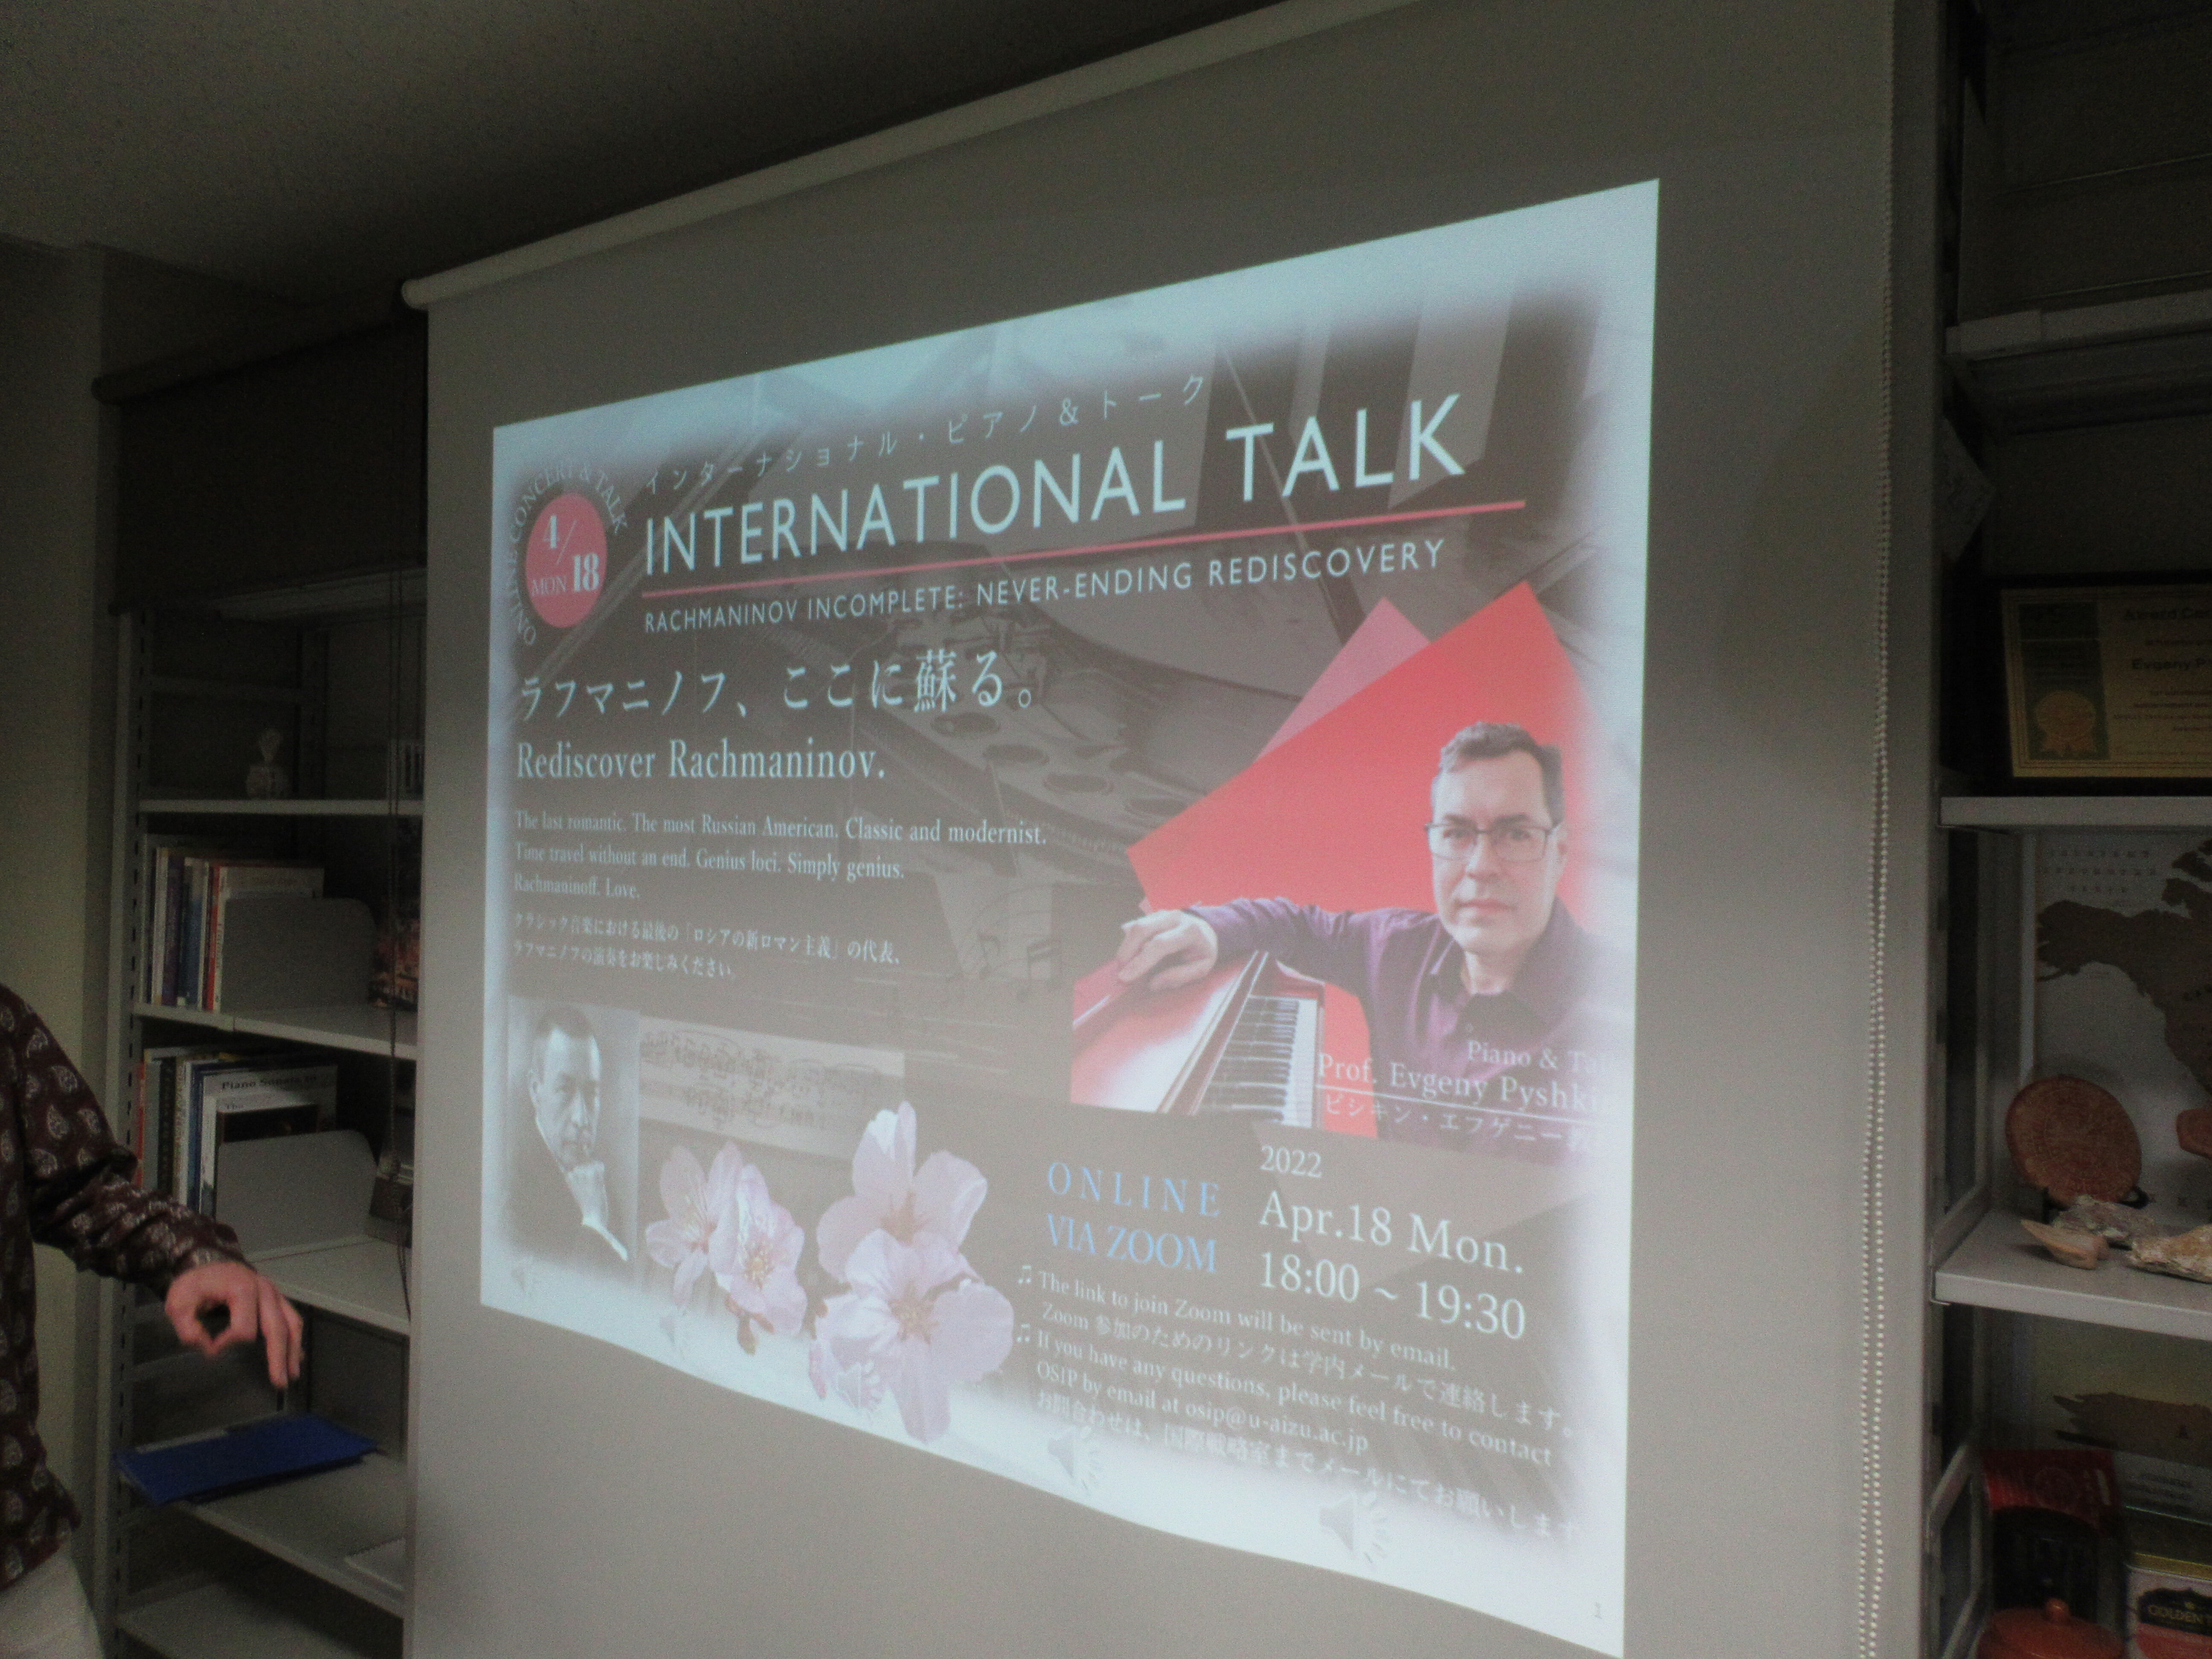 International (PIANO) Talk“RACHMANINOV INCOMPLETE” by Professor Pyshkin was held!